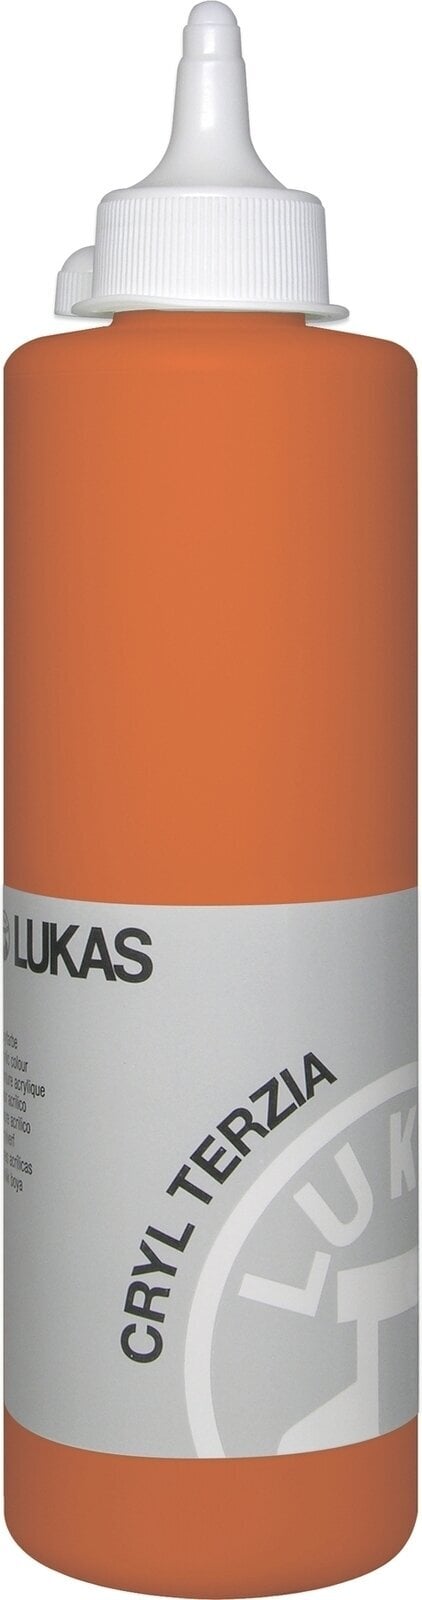 Acrylfarbe Lukas Cryl Terzia Acrylfarbe 500 ml Cadmium Orange Hue